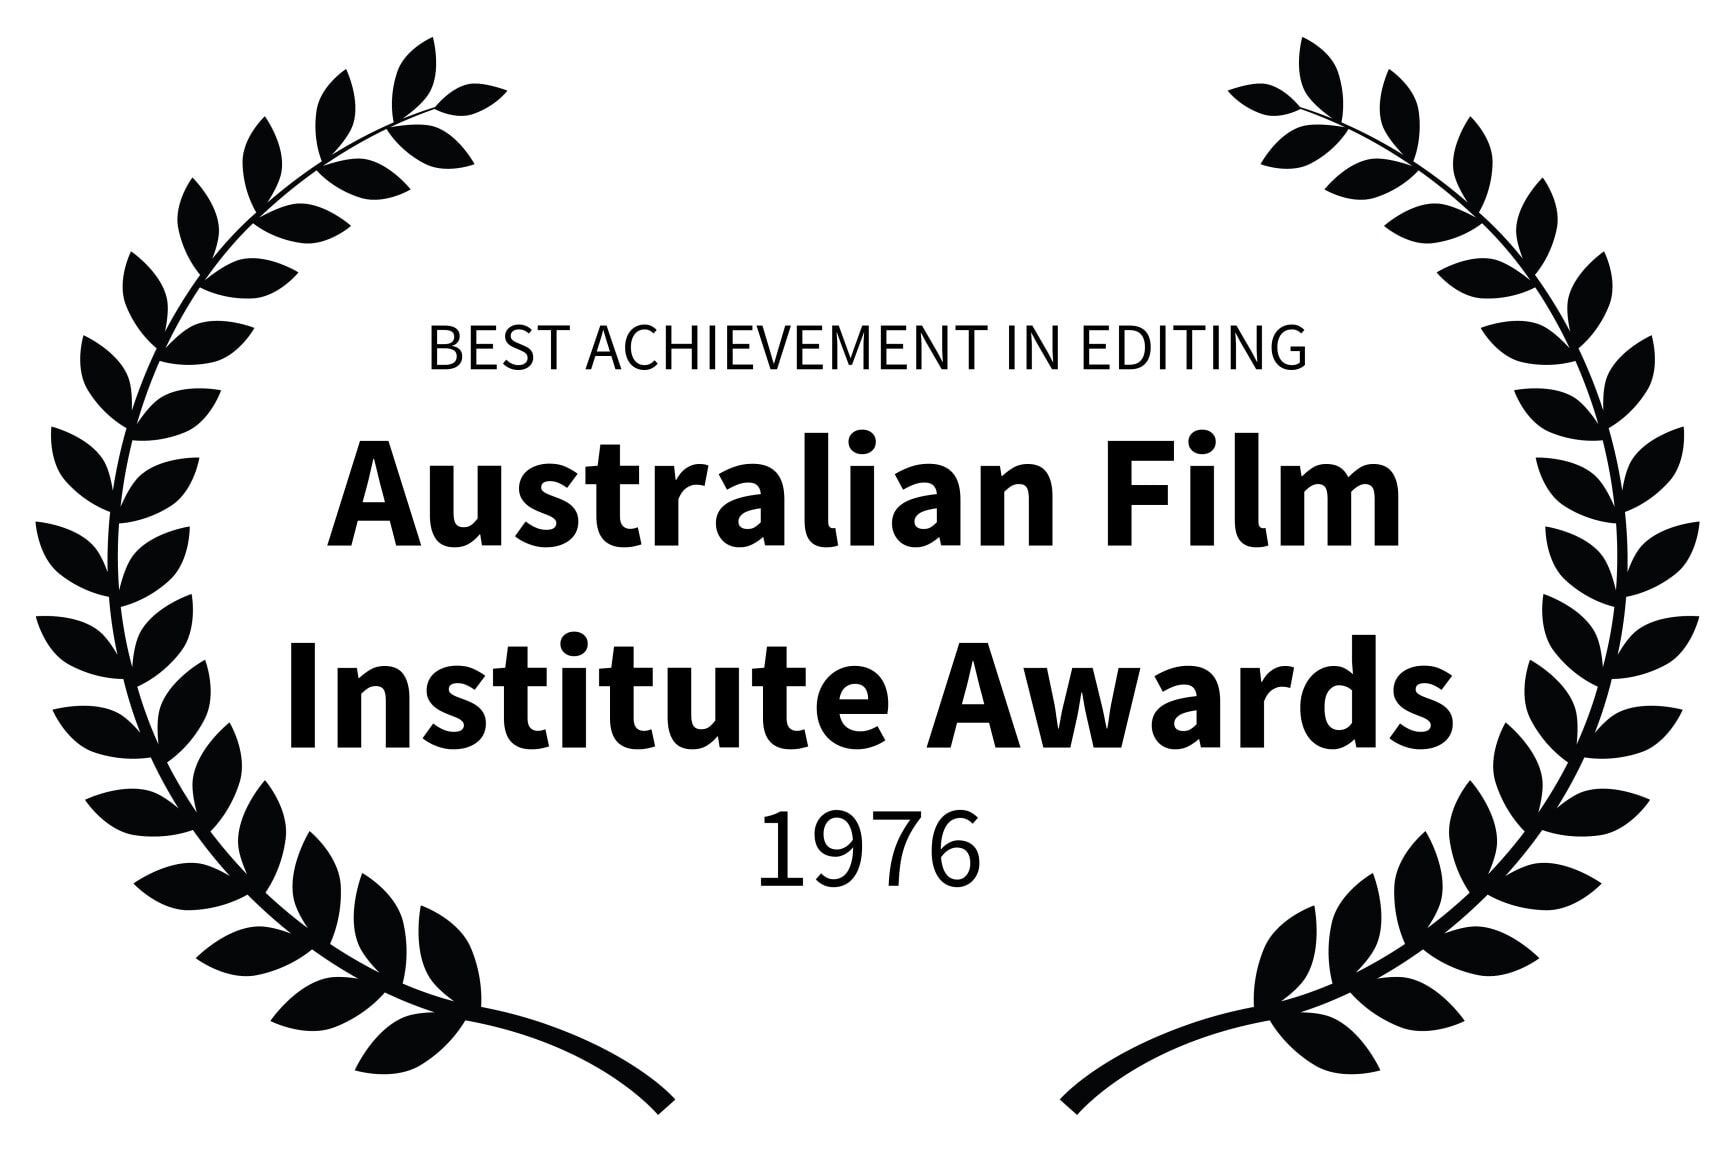 BEST ACHIEVEMENT IN EDITING - Australian Film Institute Awards - 1976